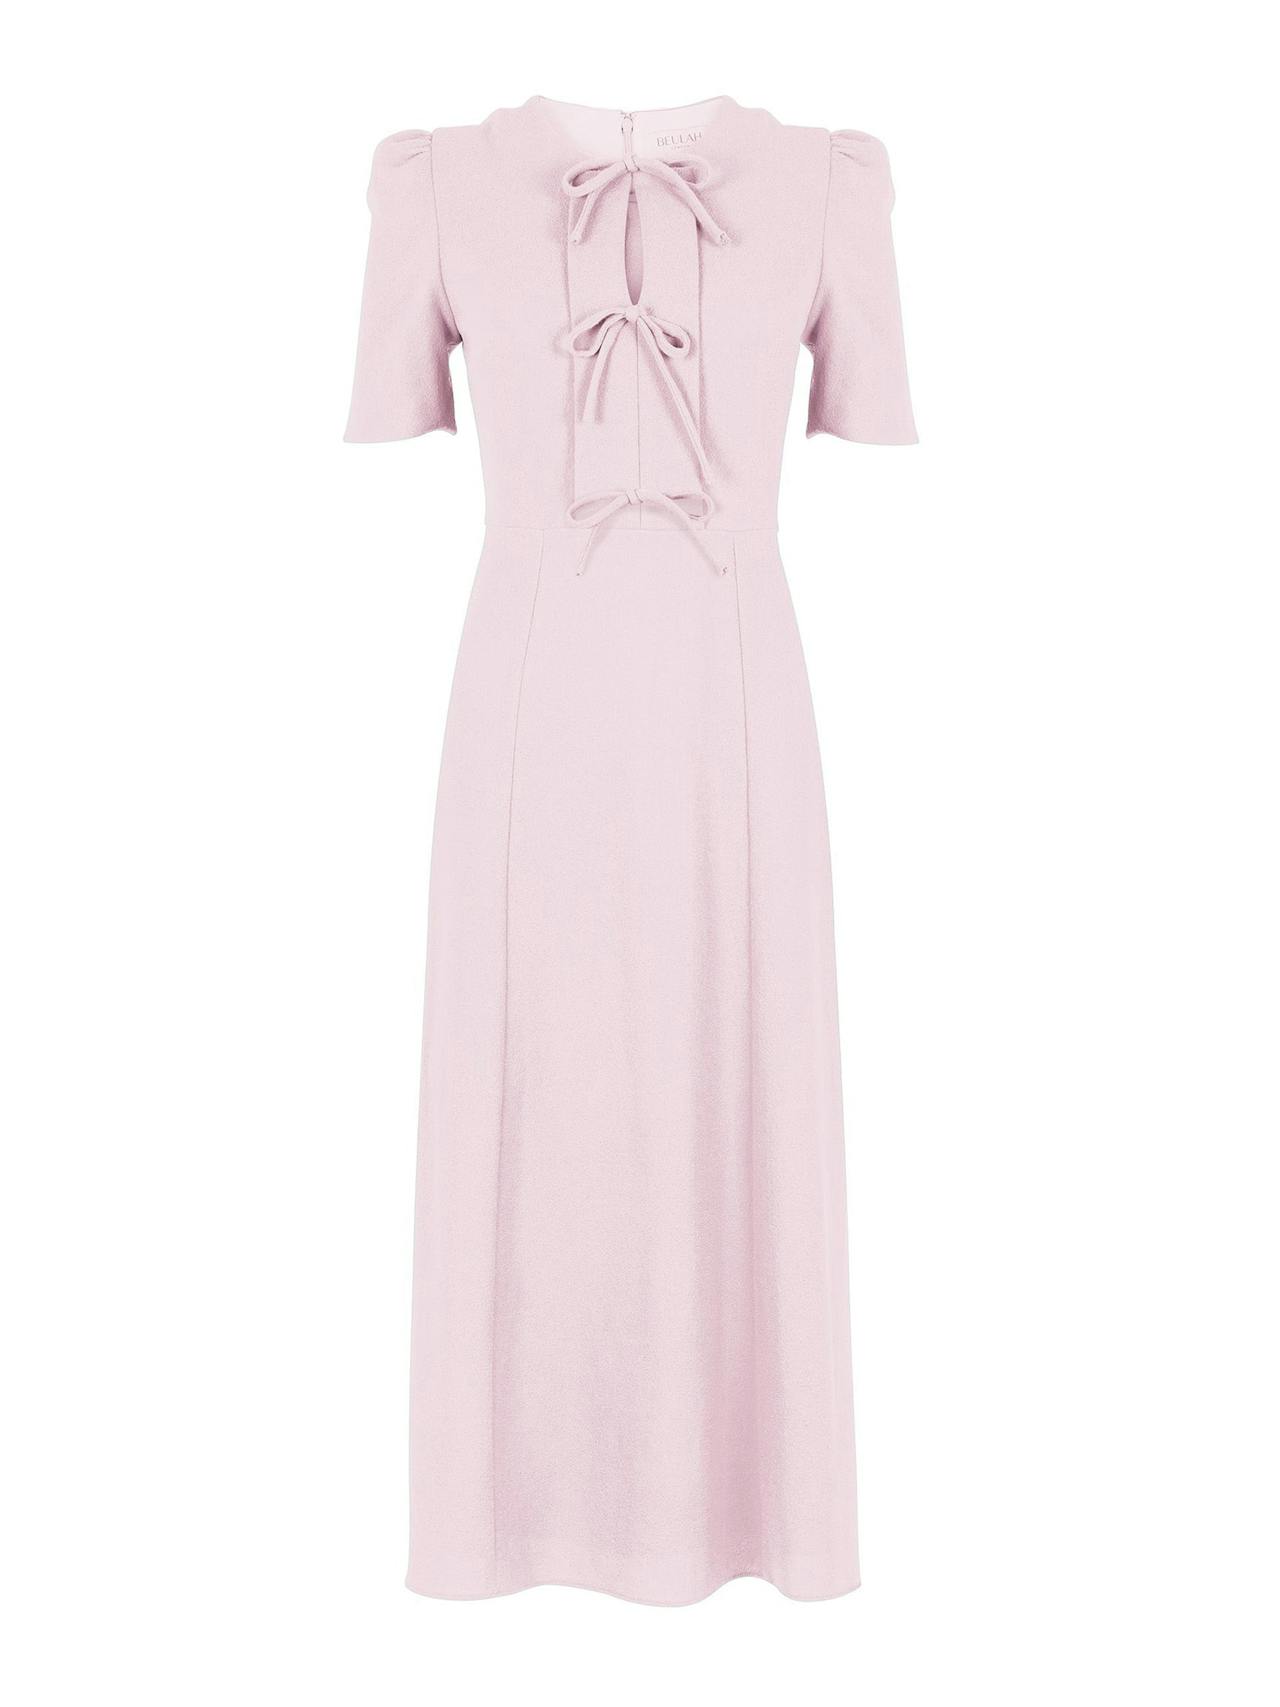 Pale pink Serena dress